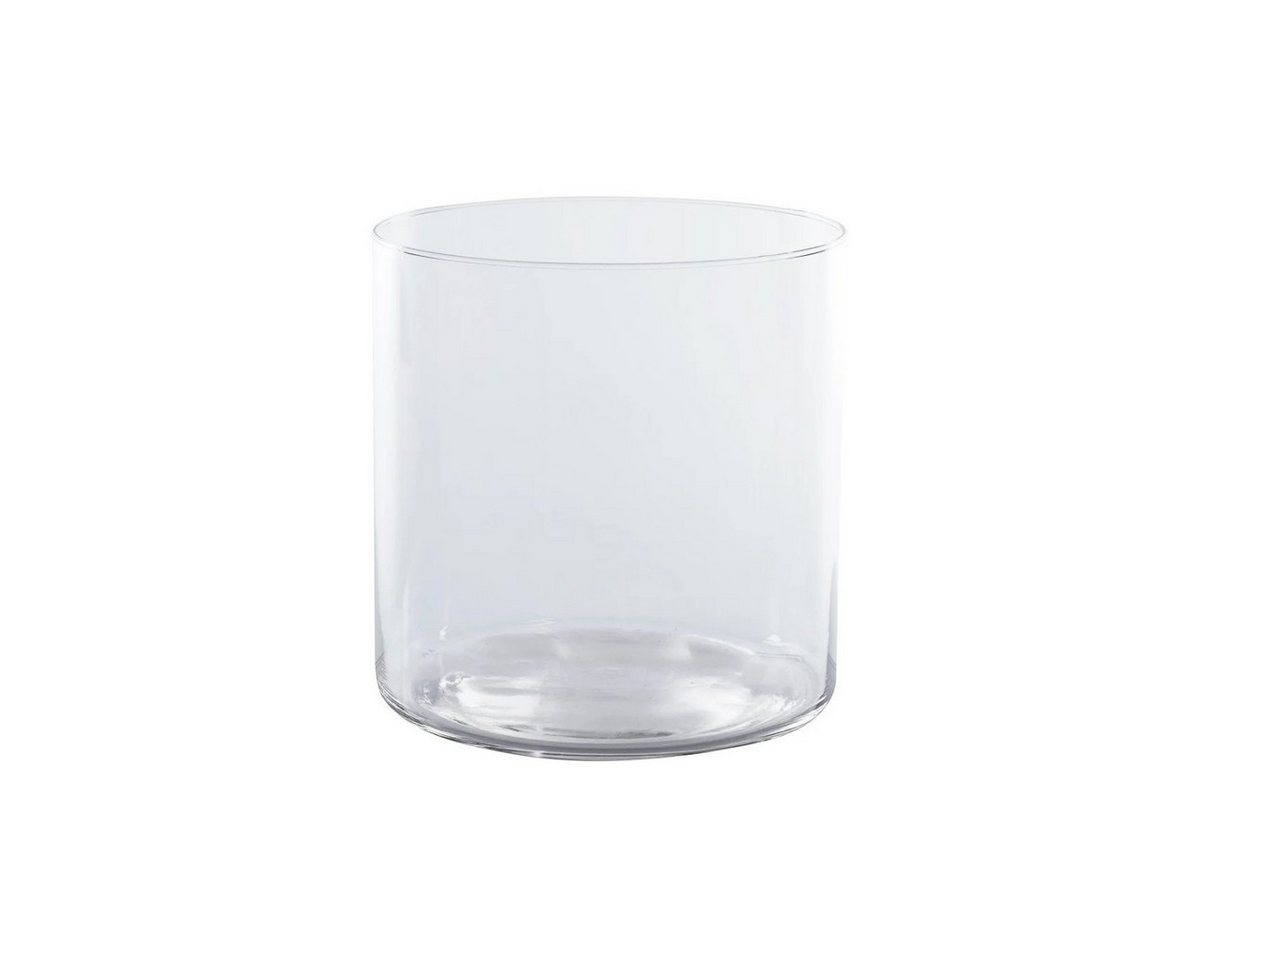 Hakbijl Glass Deko-Glas, Transparent H:19cm D:19cm Glas von Hakbijl Glass